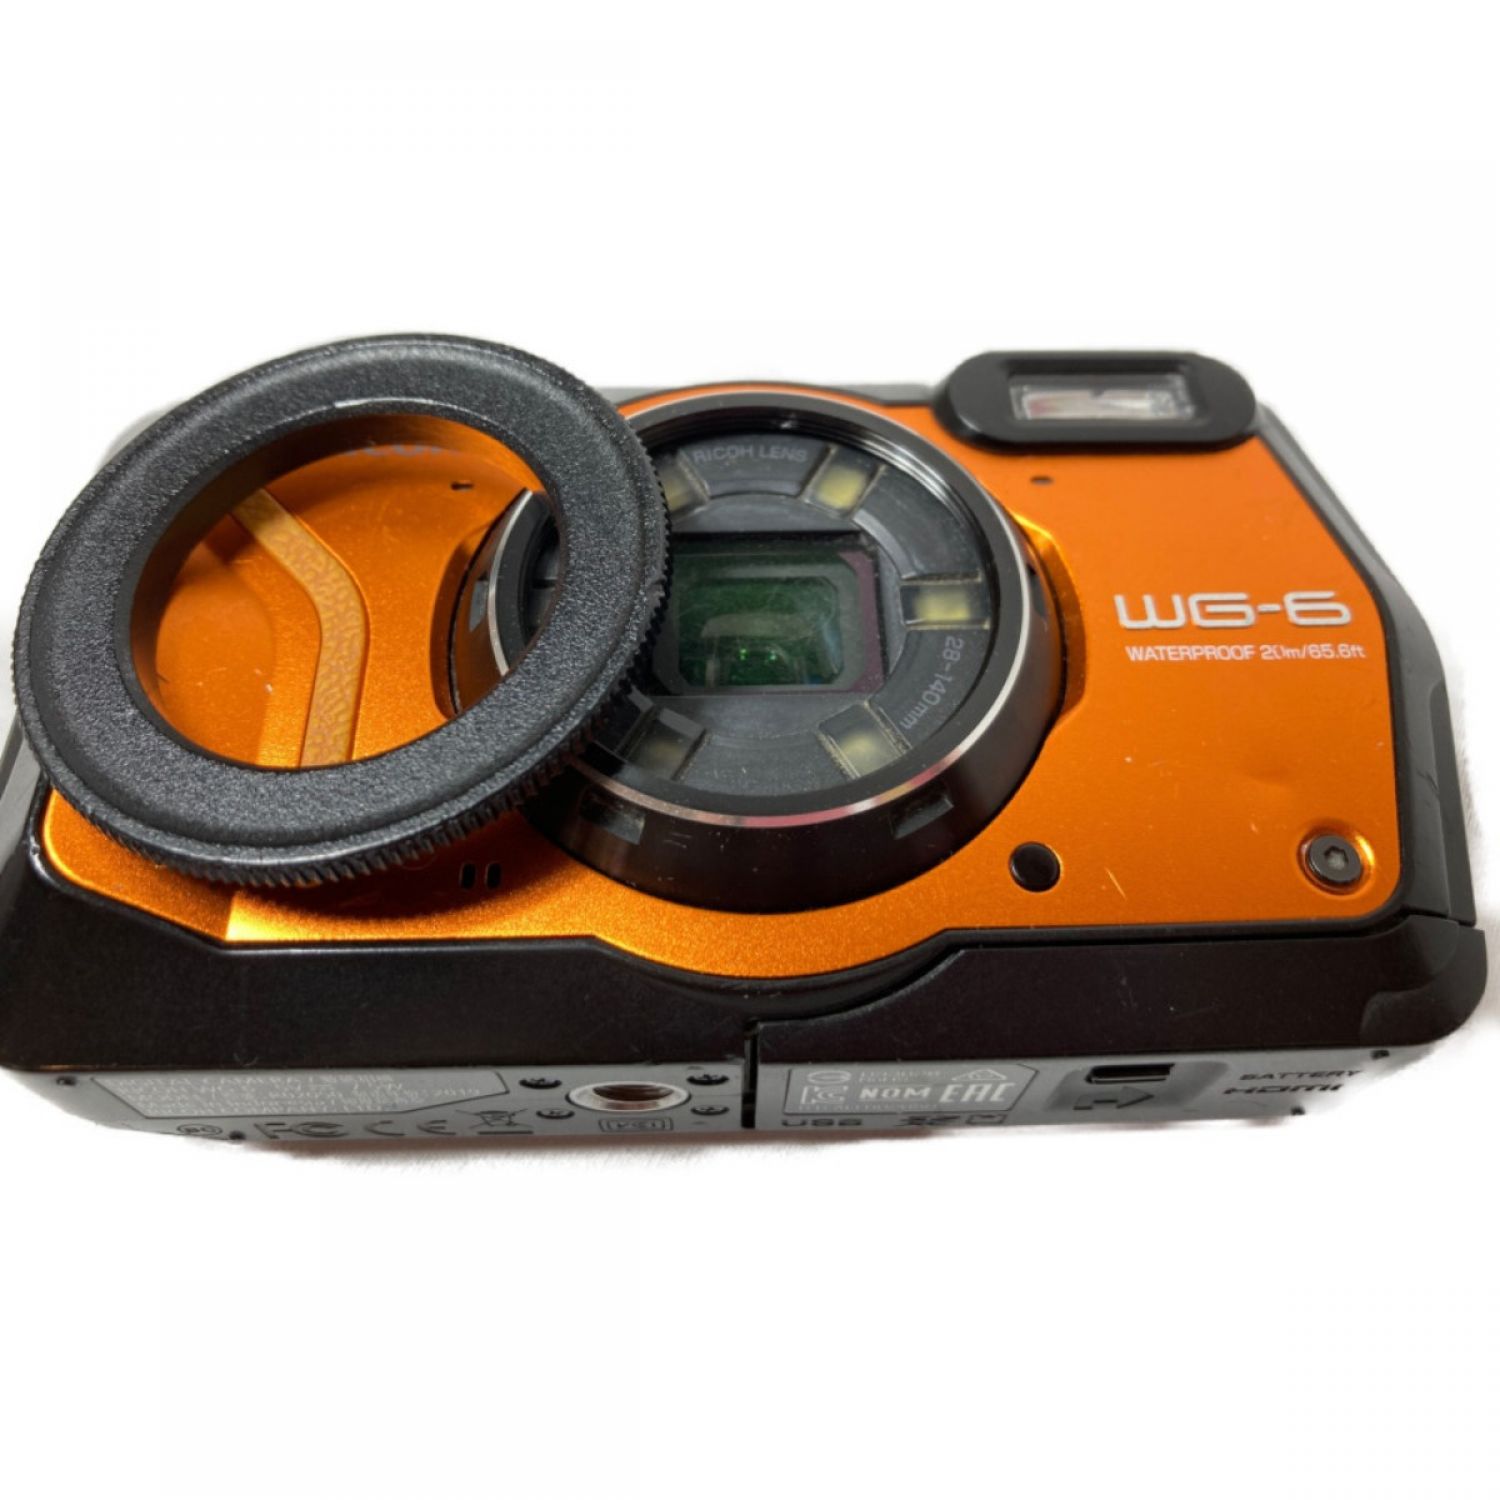 RICOH (リコー) WG-M2 新品未使用品 アクションカメラ 保証書付